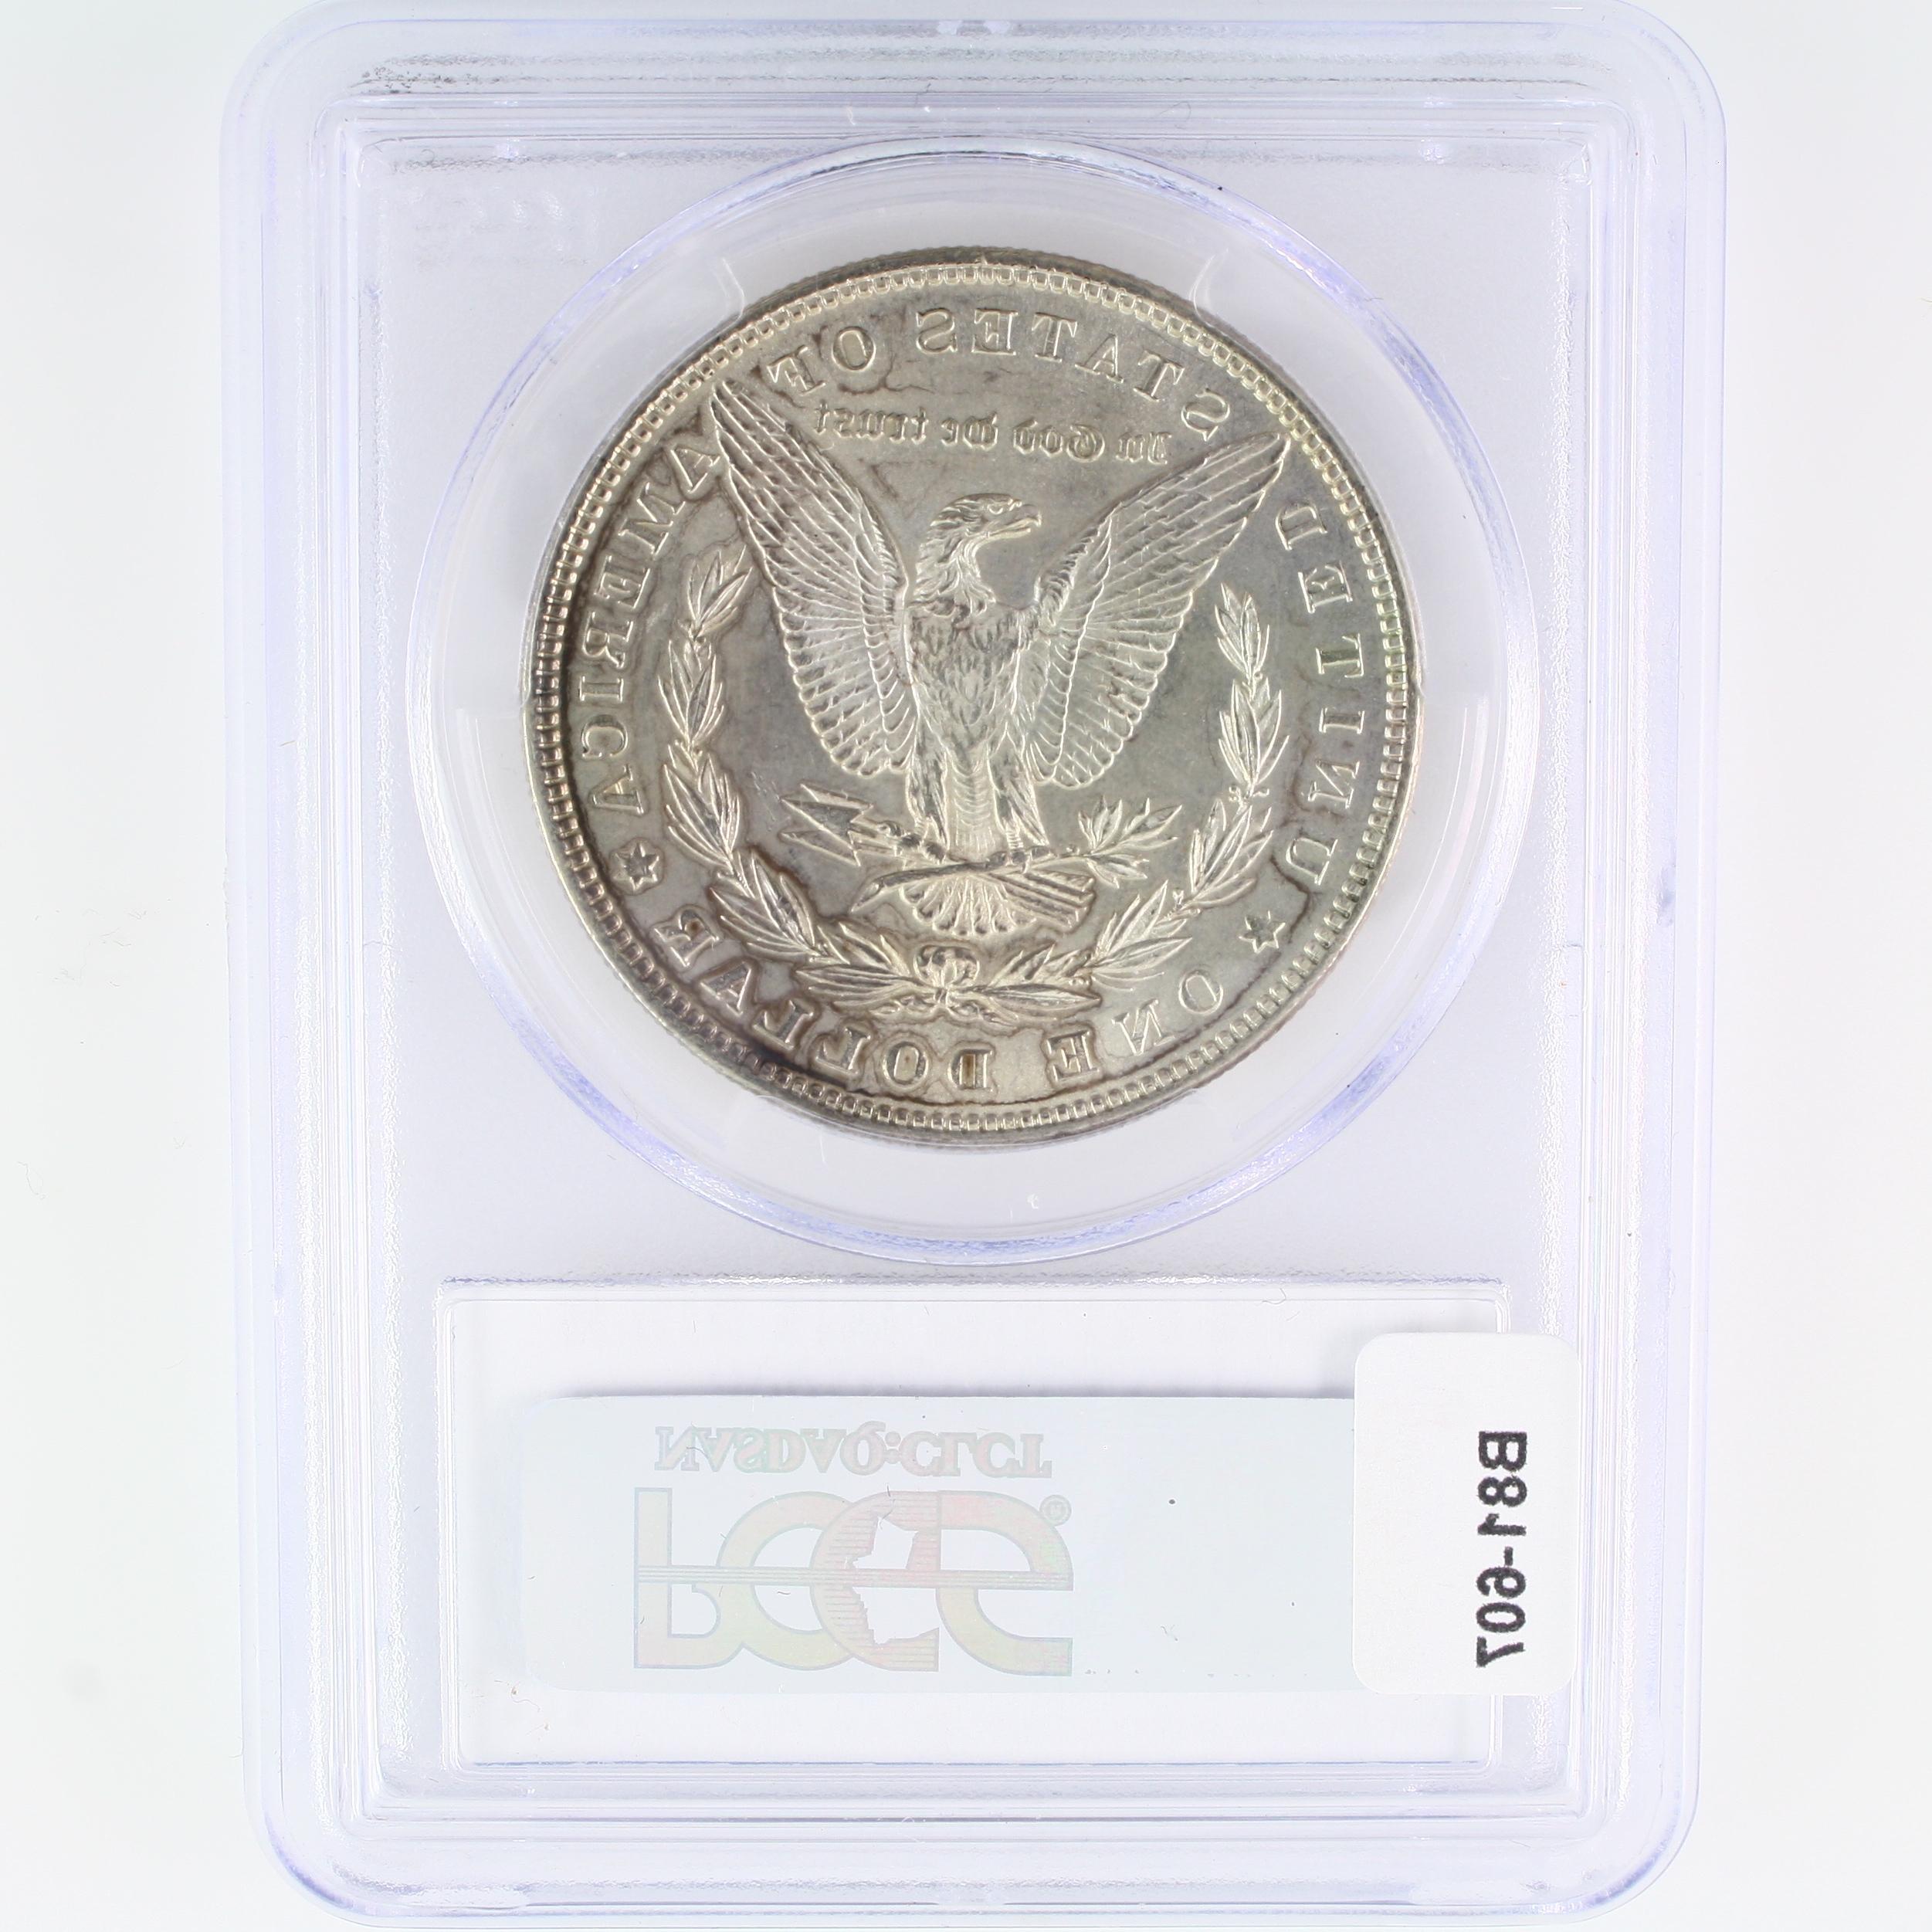 Certified 1883 U.S. Morgan silver dollar